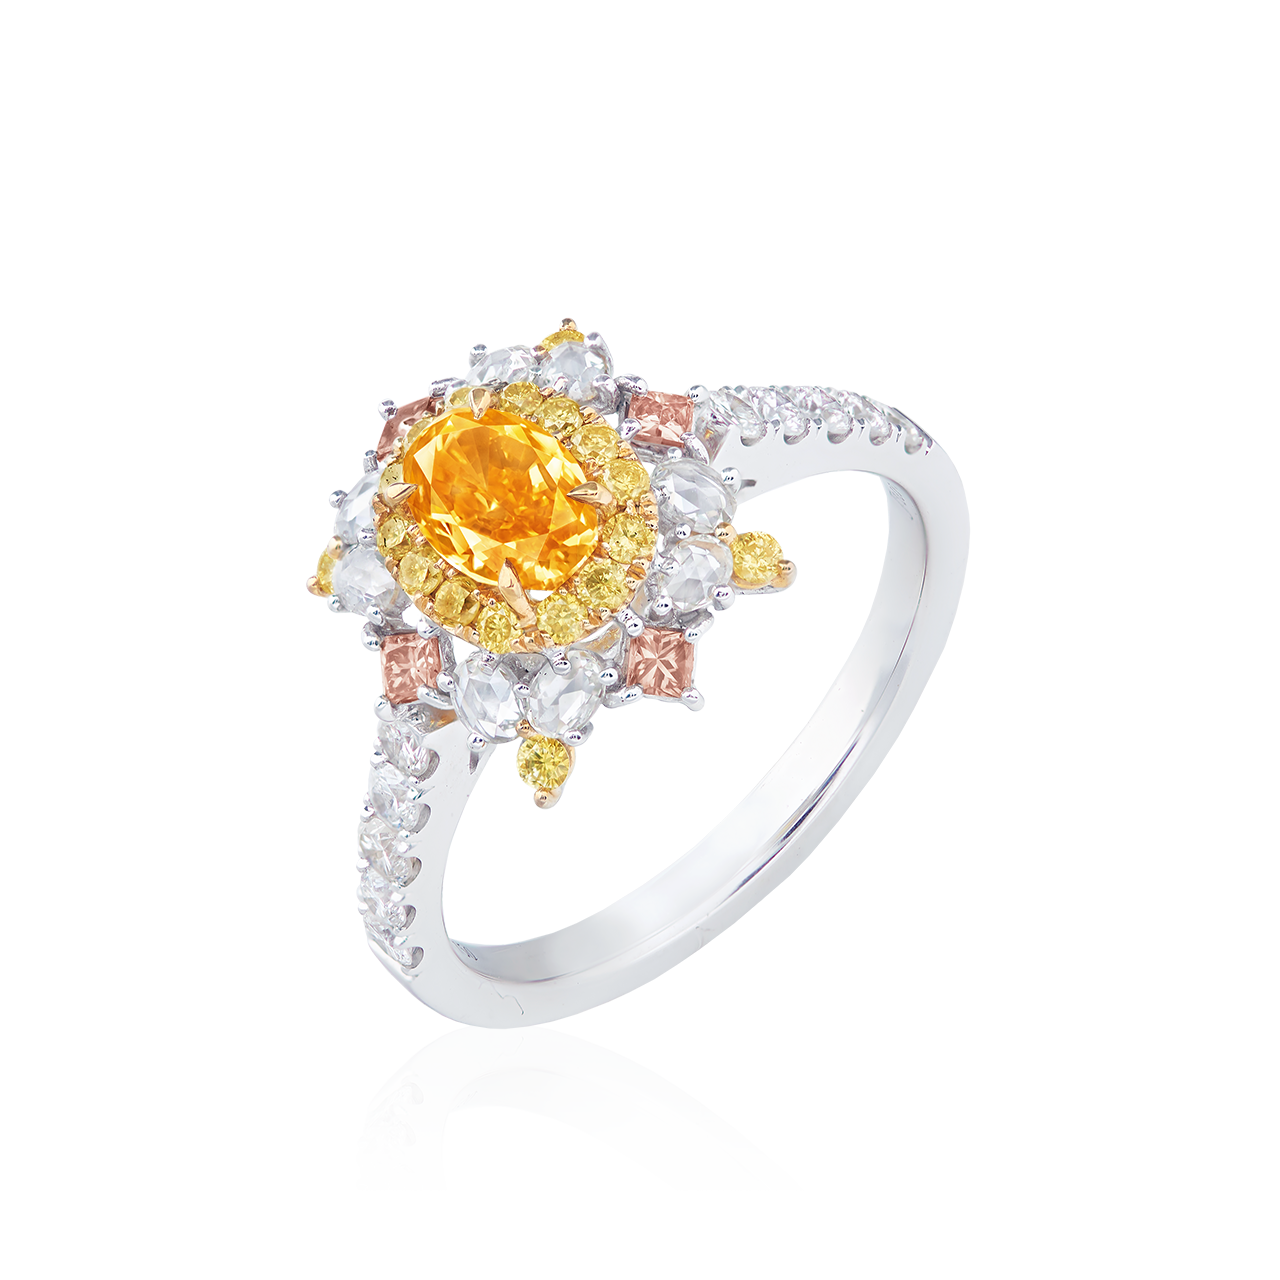 GIA 0.52克拉 艷彩黃橘鑽鑽戒
Fancy Vivid Yellow -Orange Colored 
Diamond and Diamond Ring